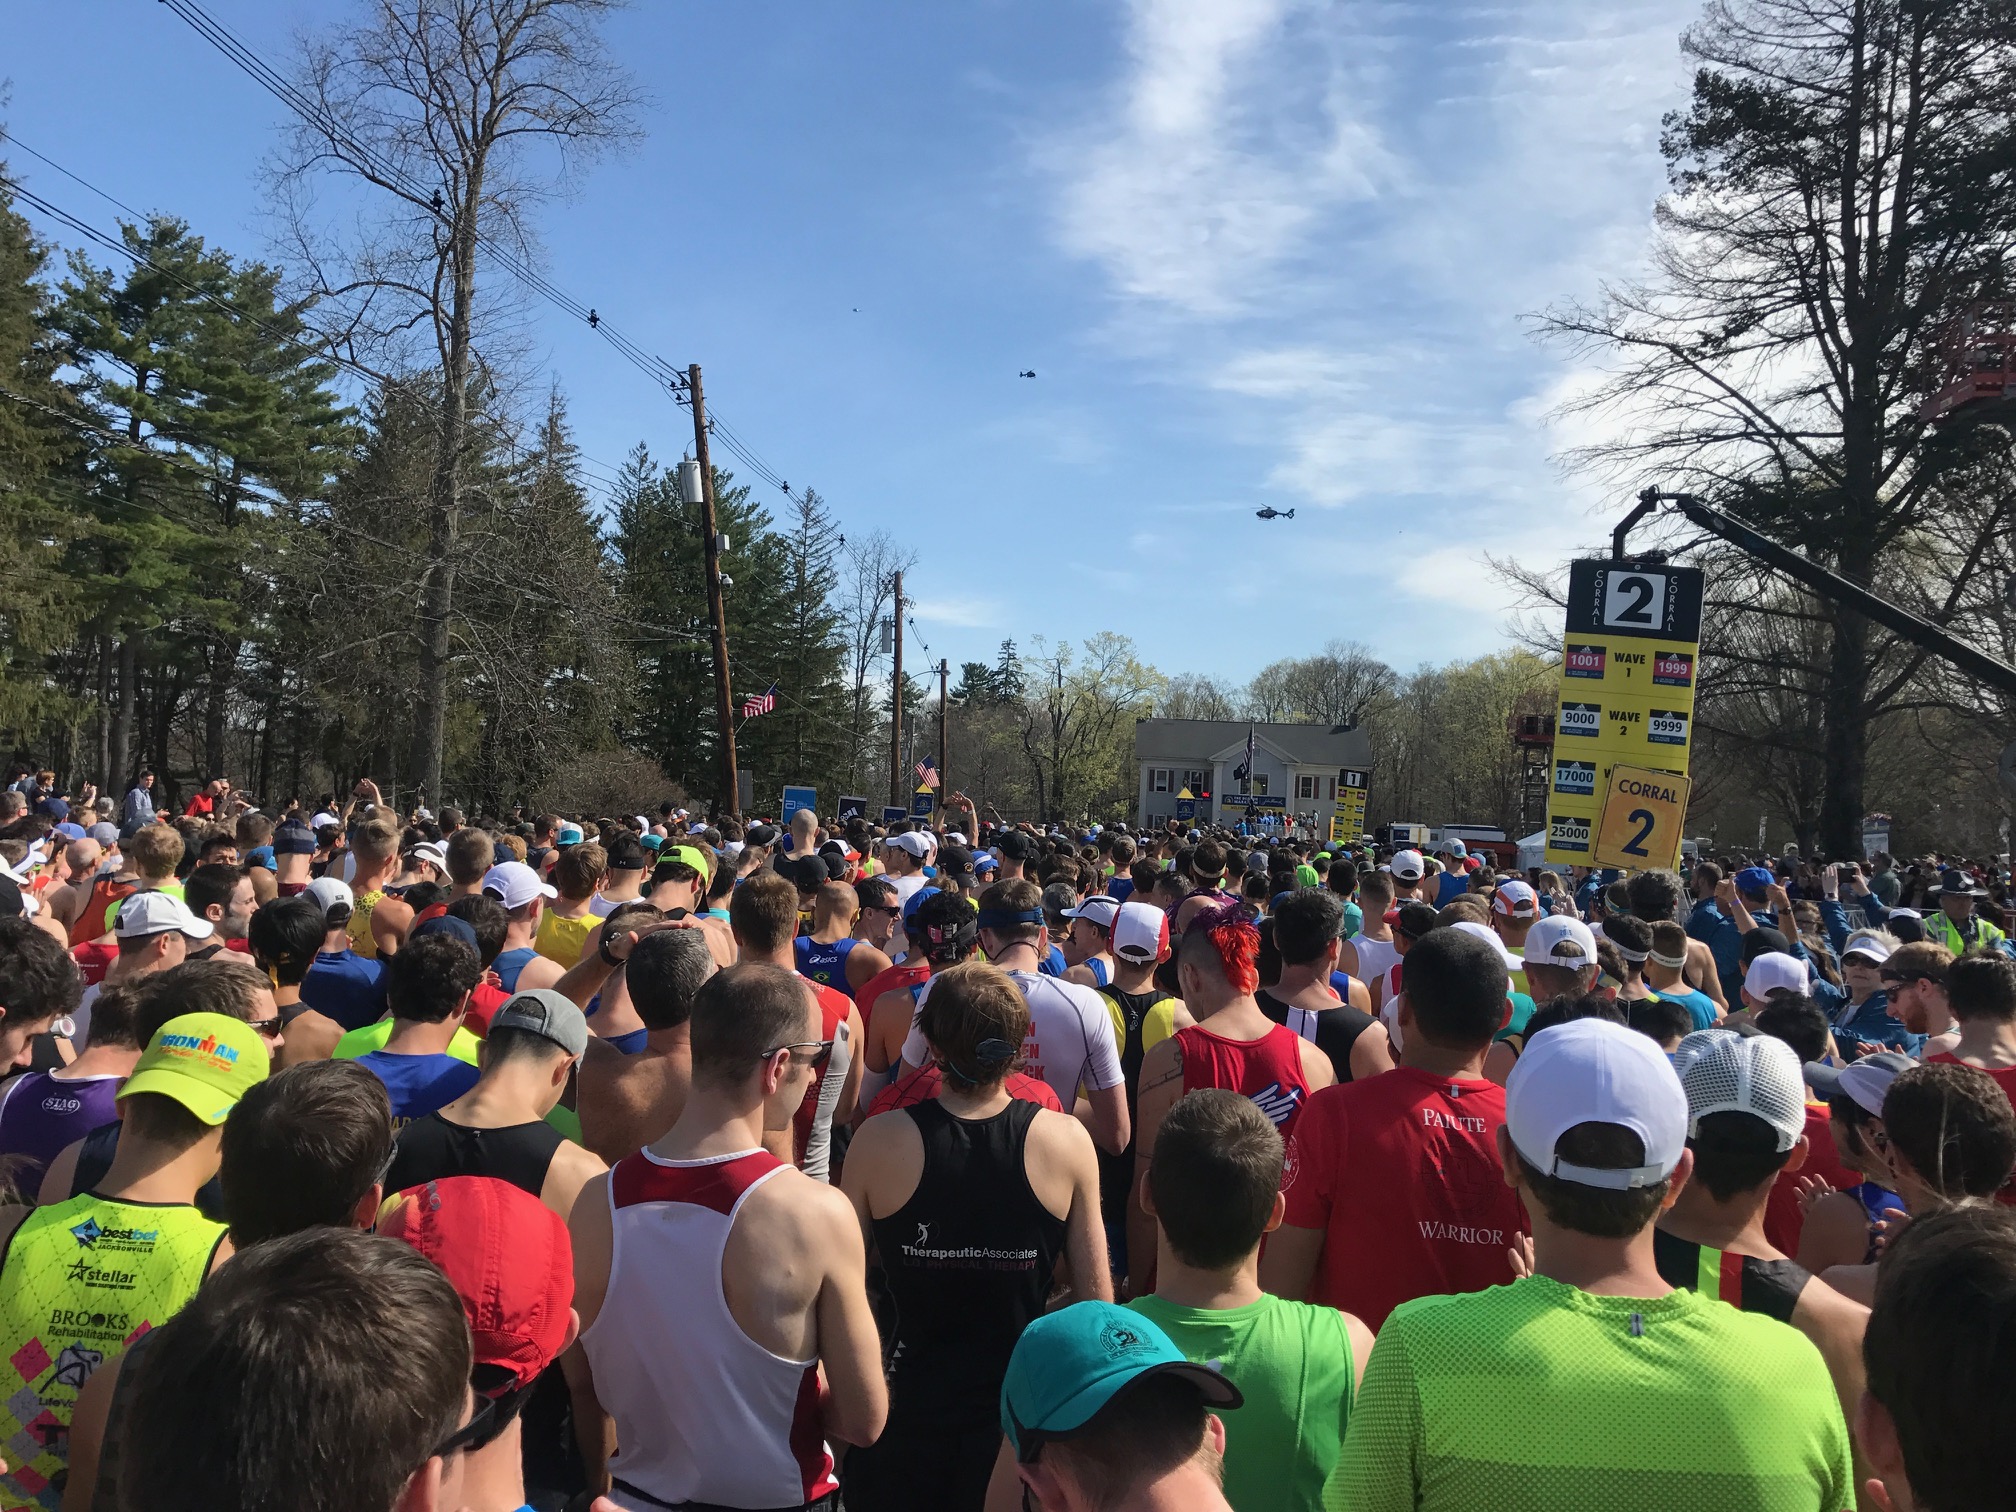 Boston Marathon 2017